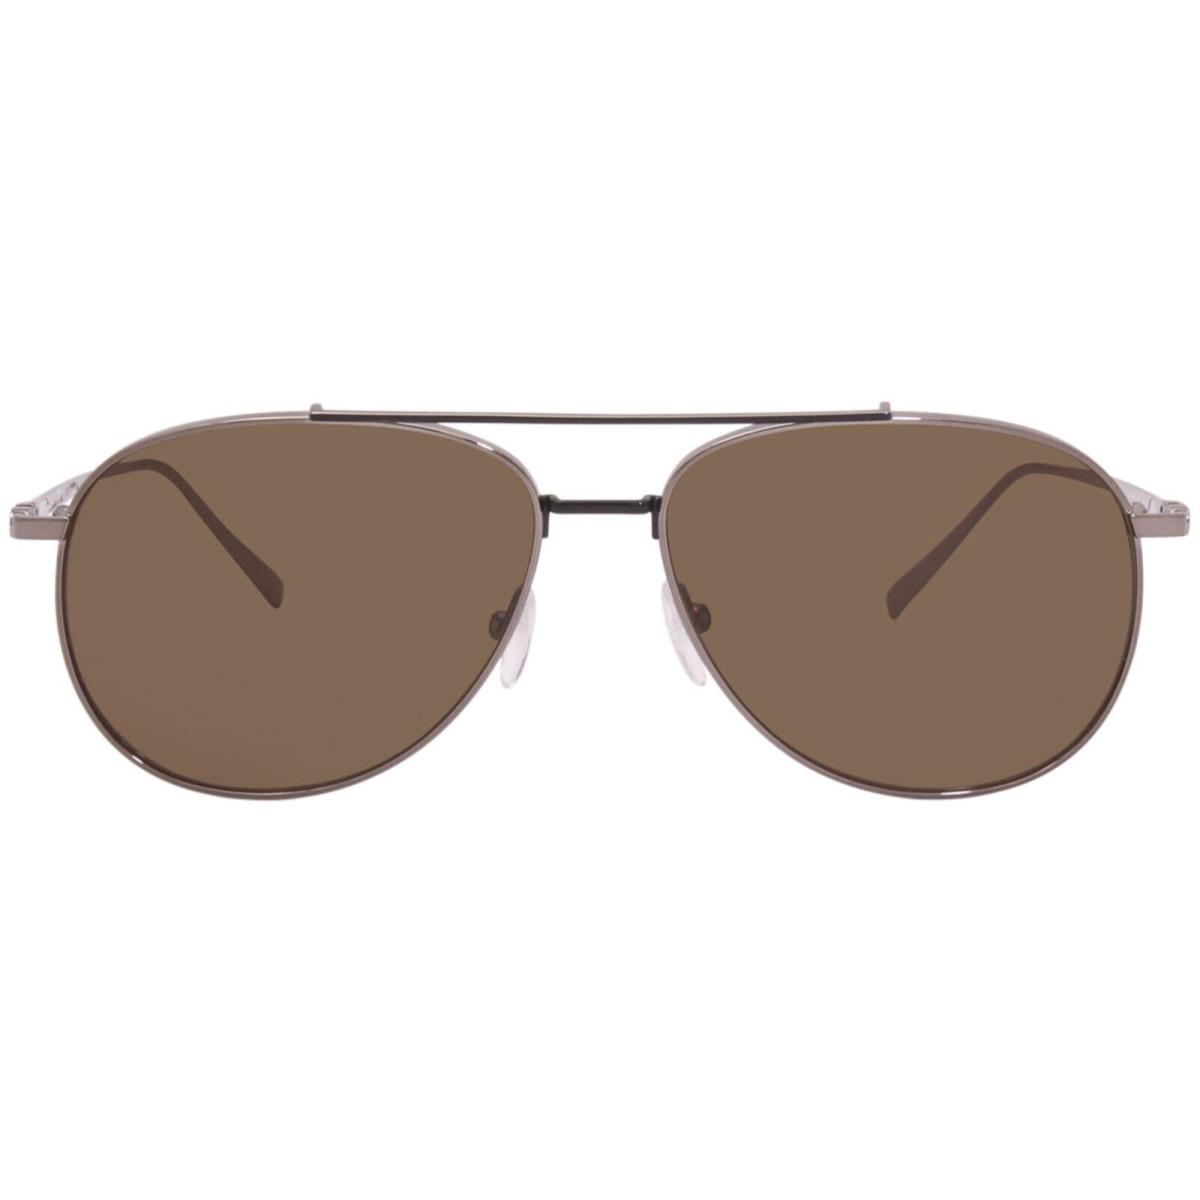 Salvatore Ferragamo sunglasses  - Shiny Gunmetal Frame, Brown Lens 0